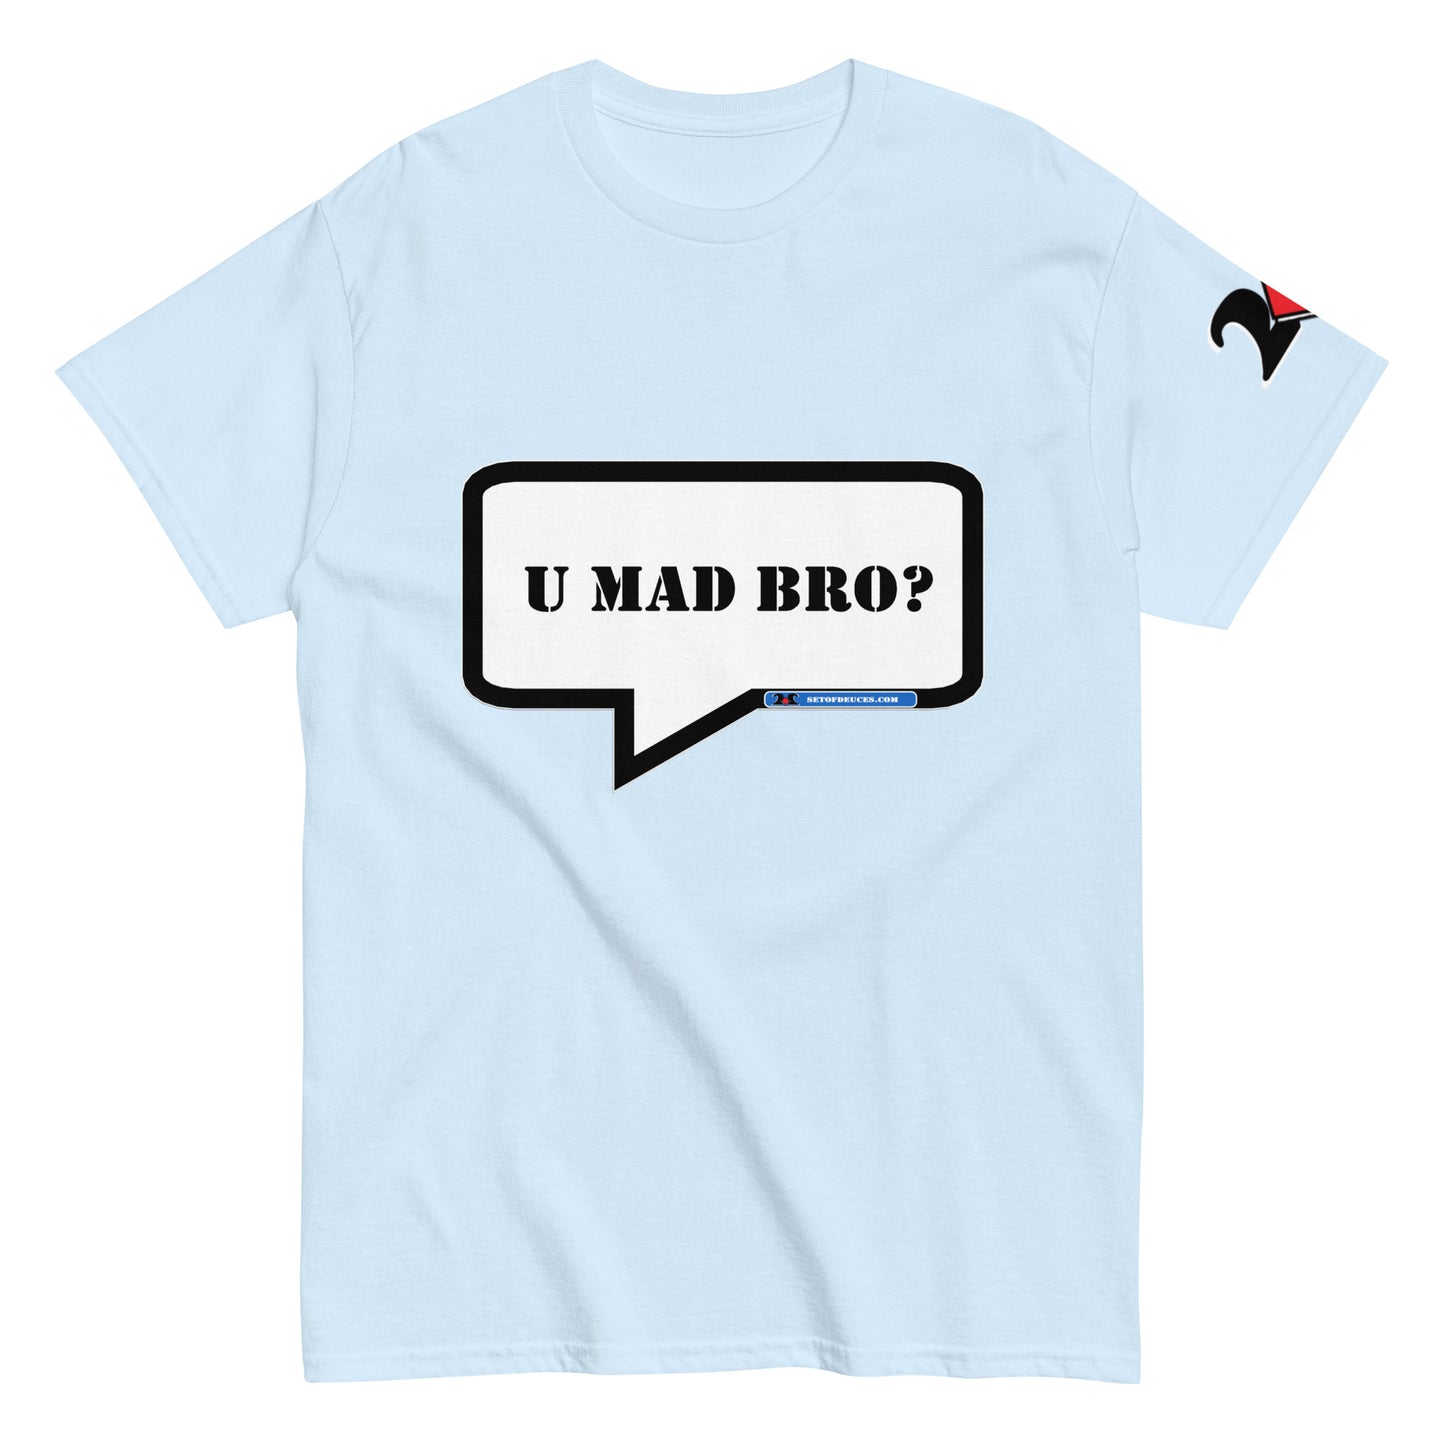 U Mad Bro? by Set of Deuces